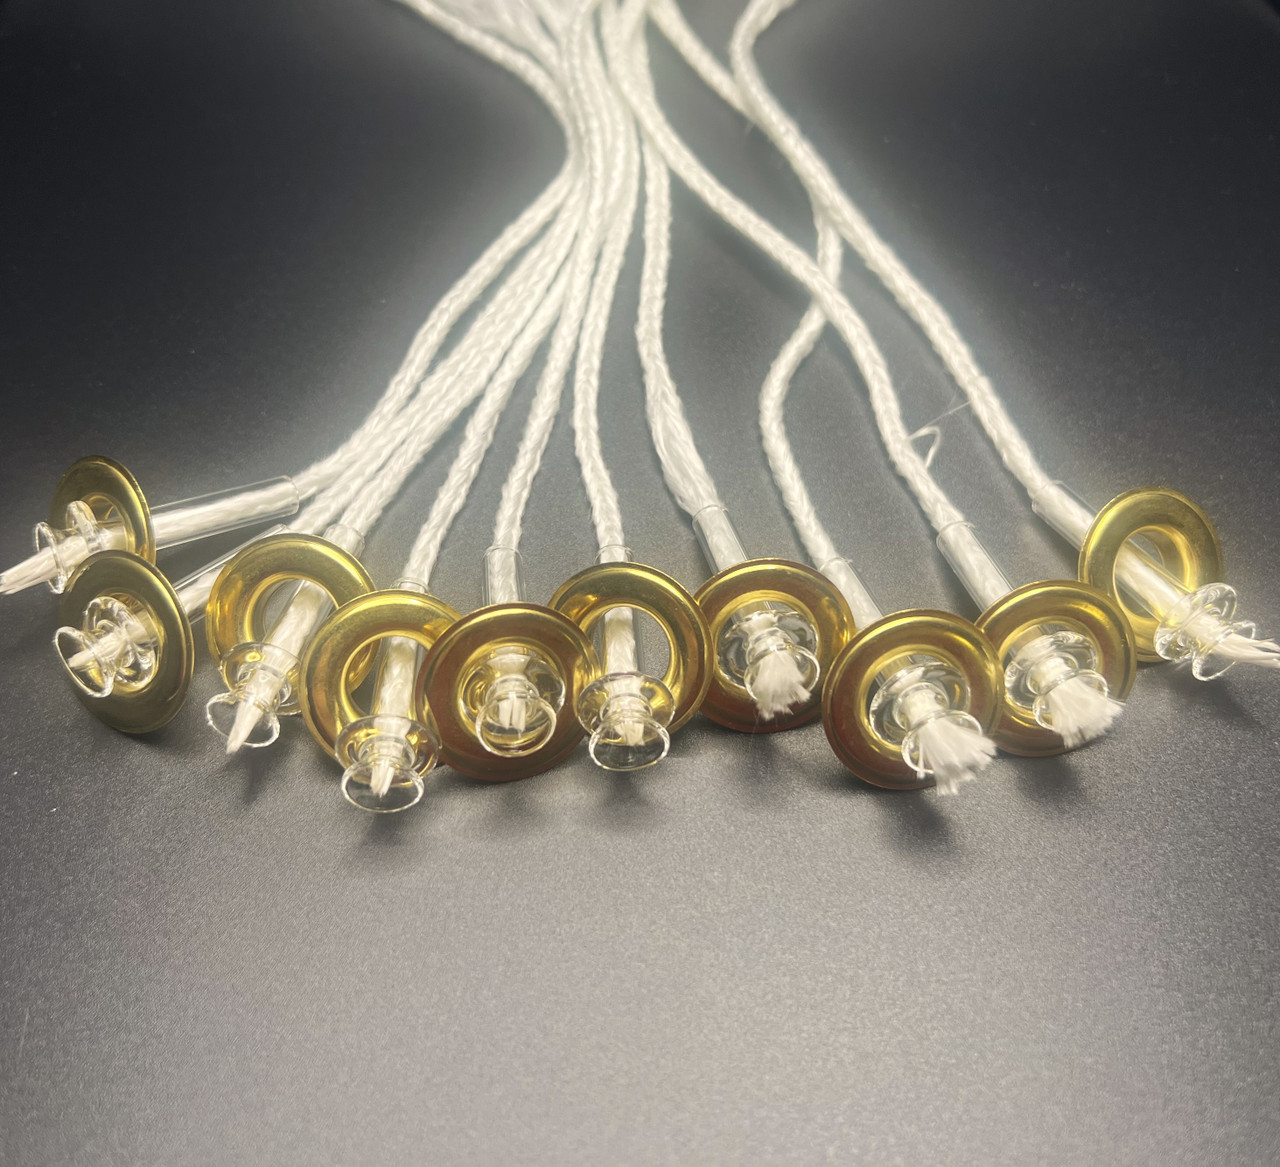 White LED Diamond Bling Rings (24-Pack) | LED Jewelry